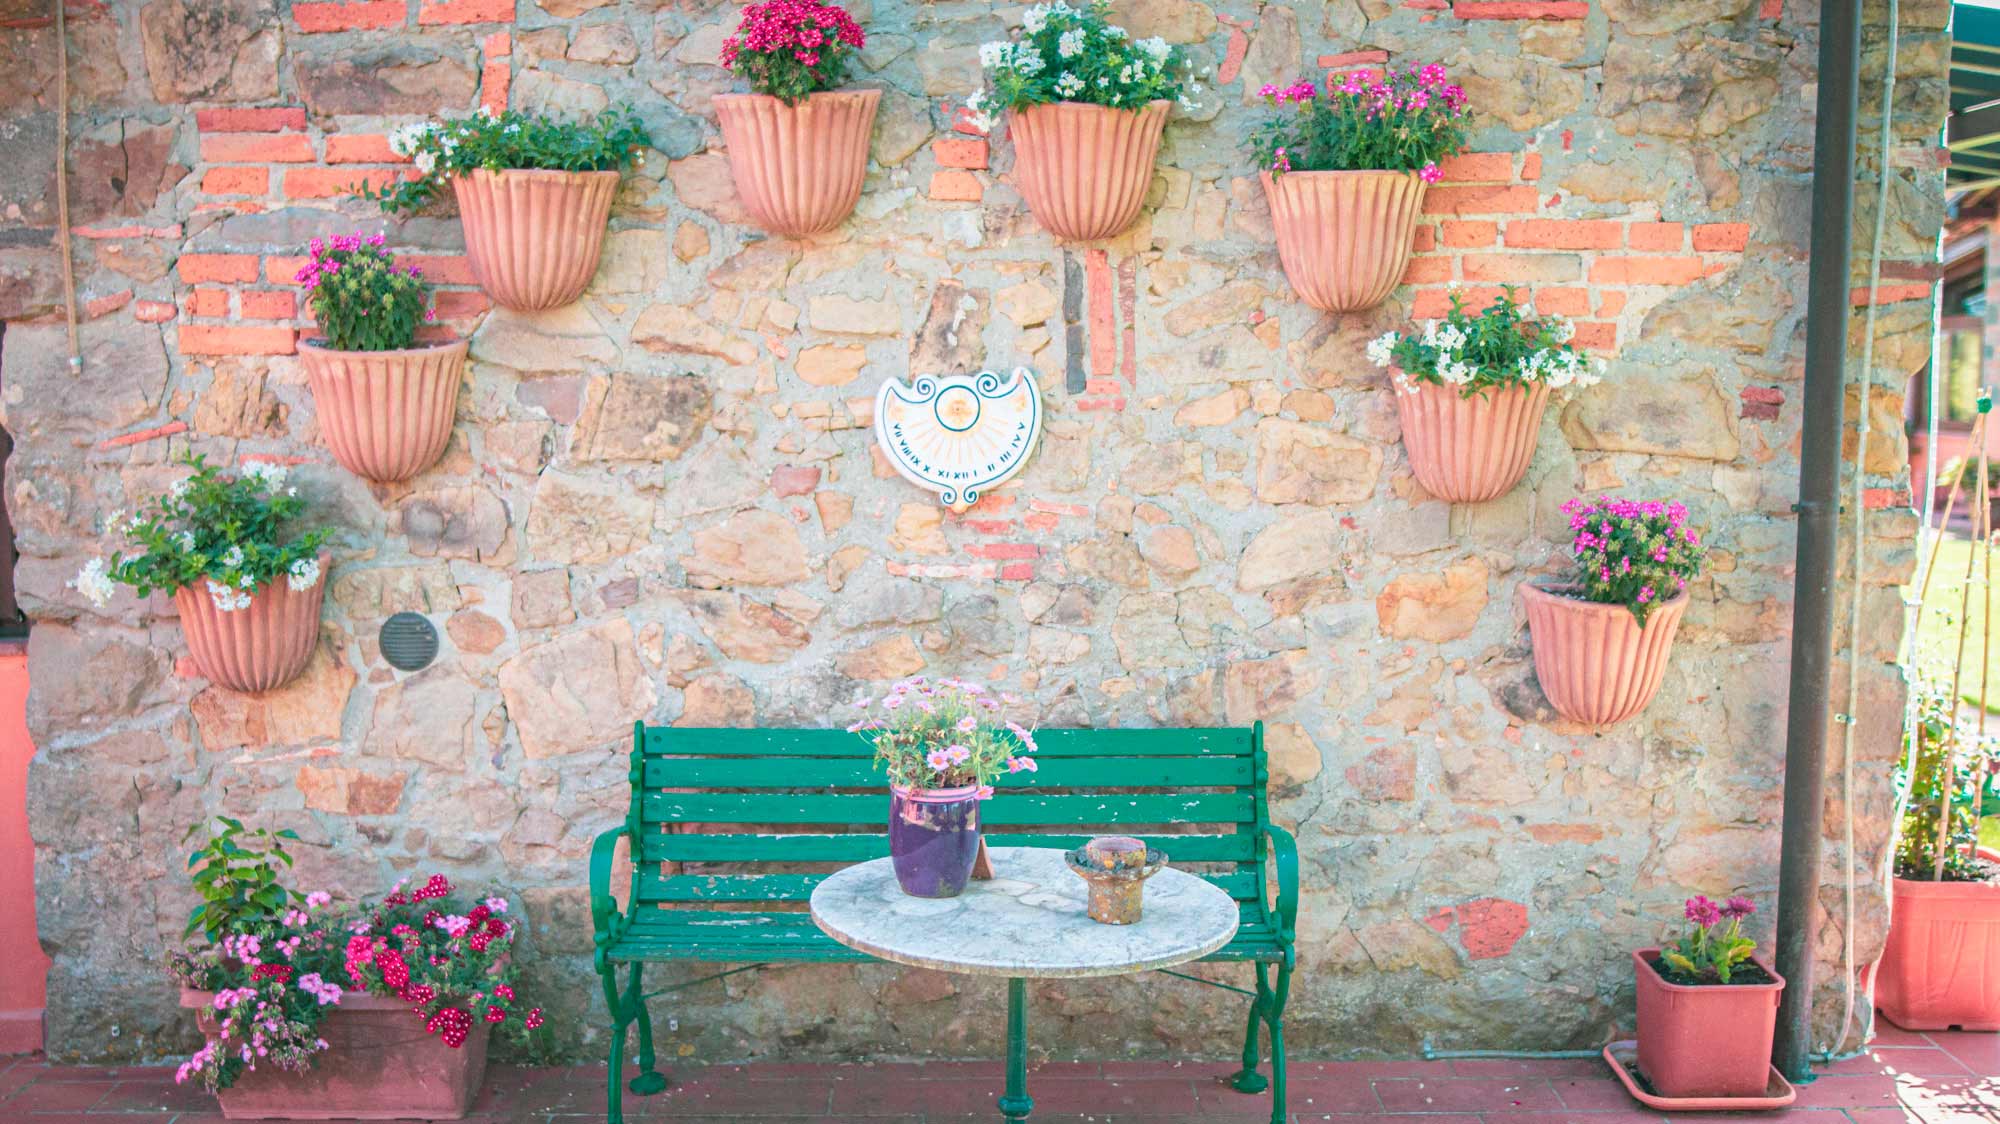 podere fioretto casa vacanze con piscina in Toscana, giardino